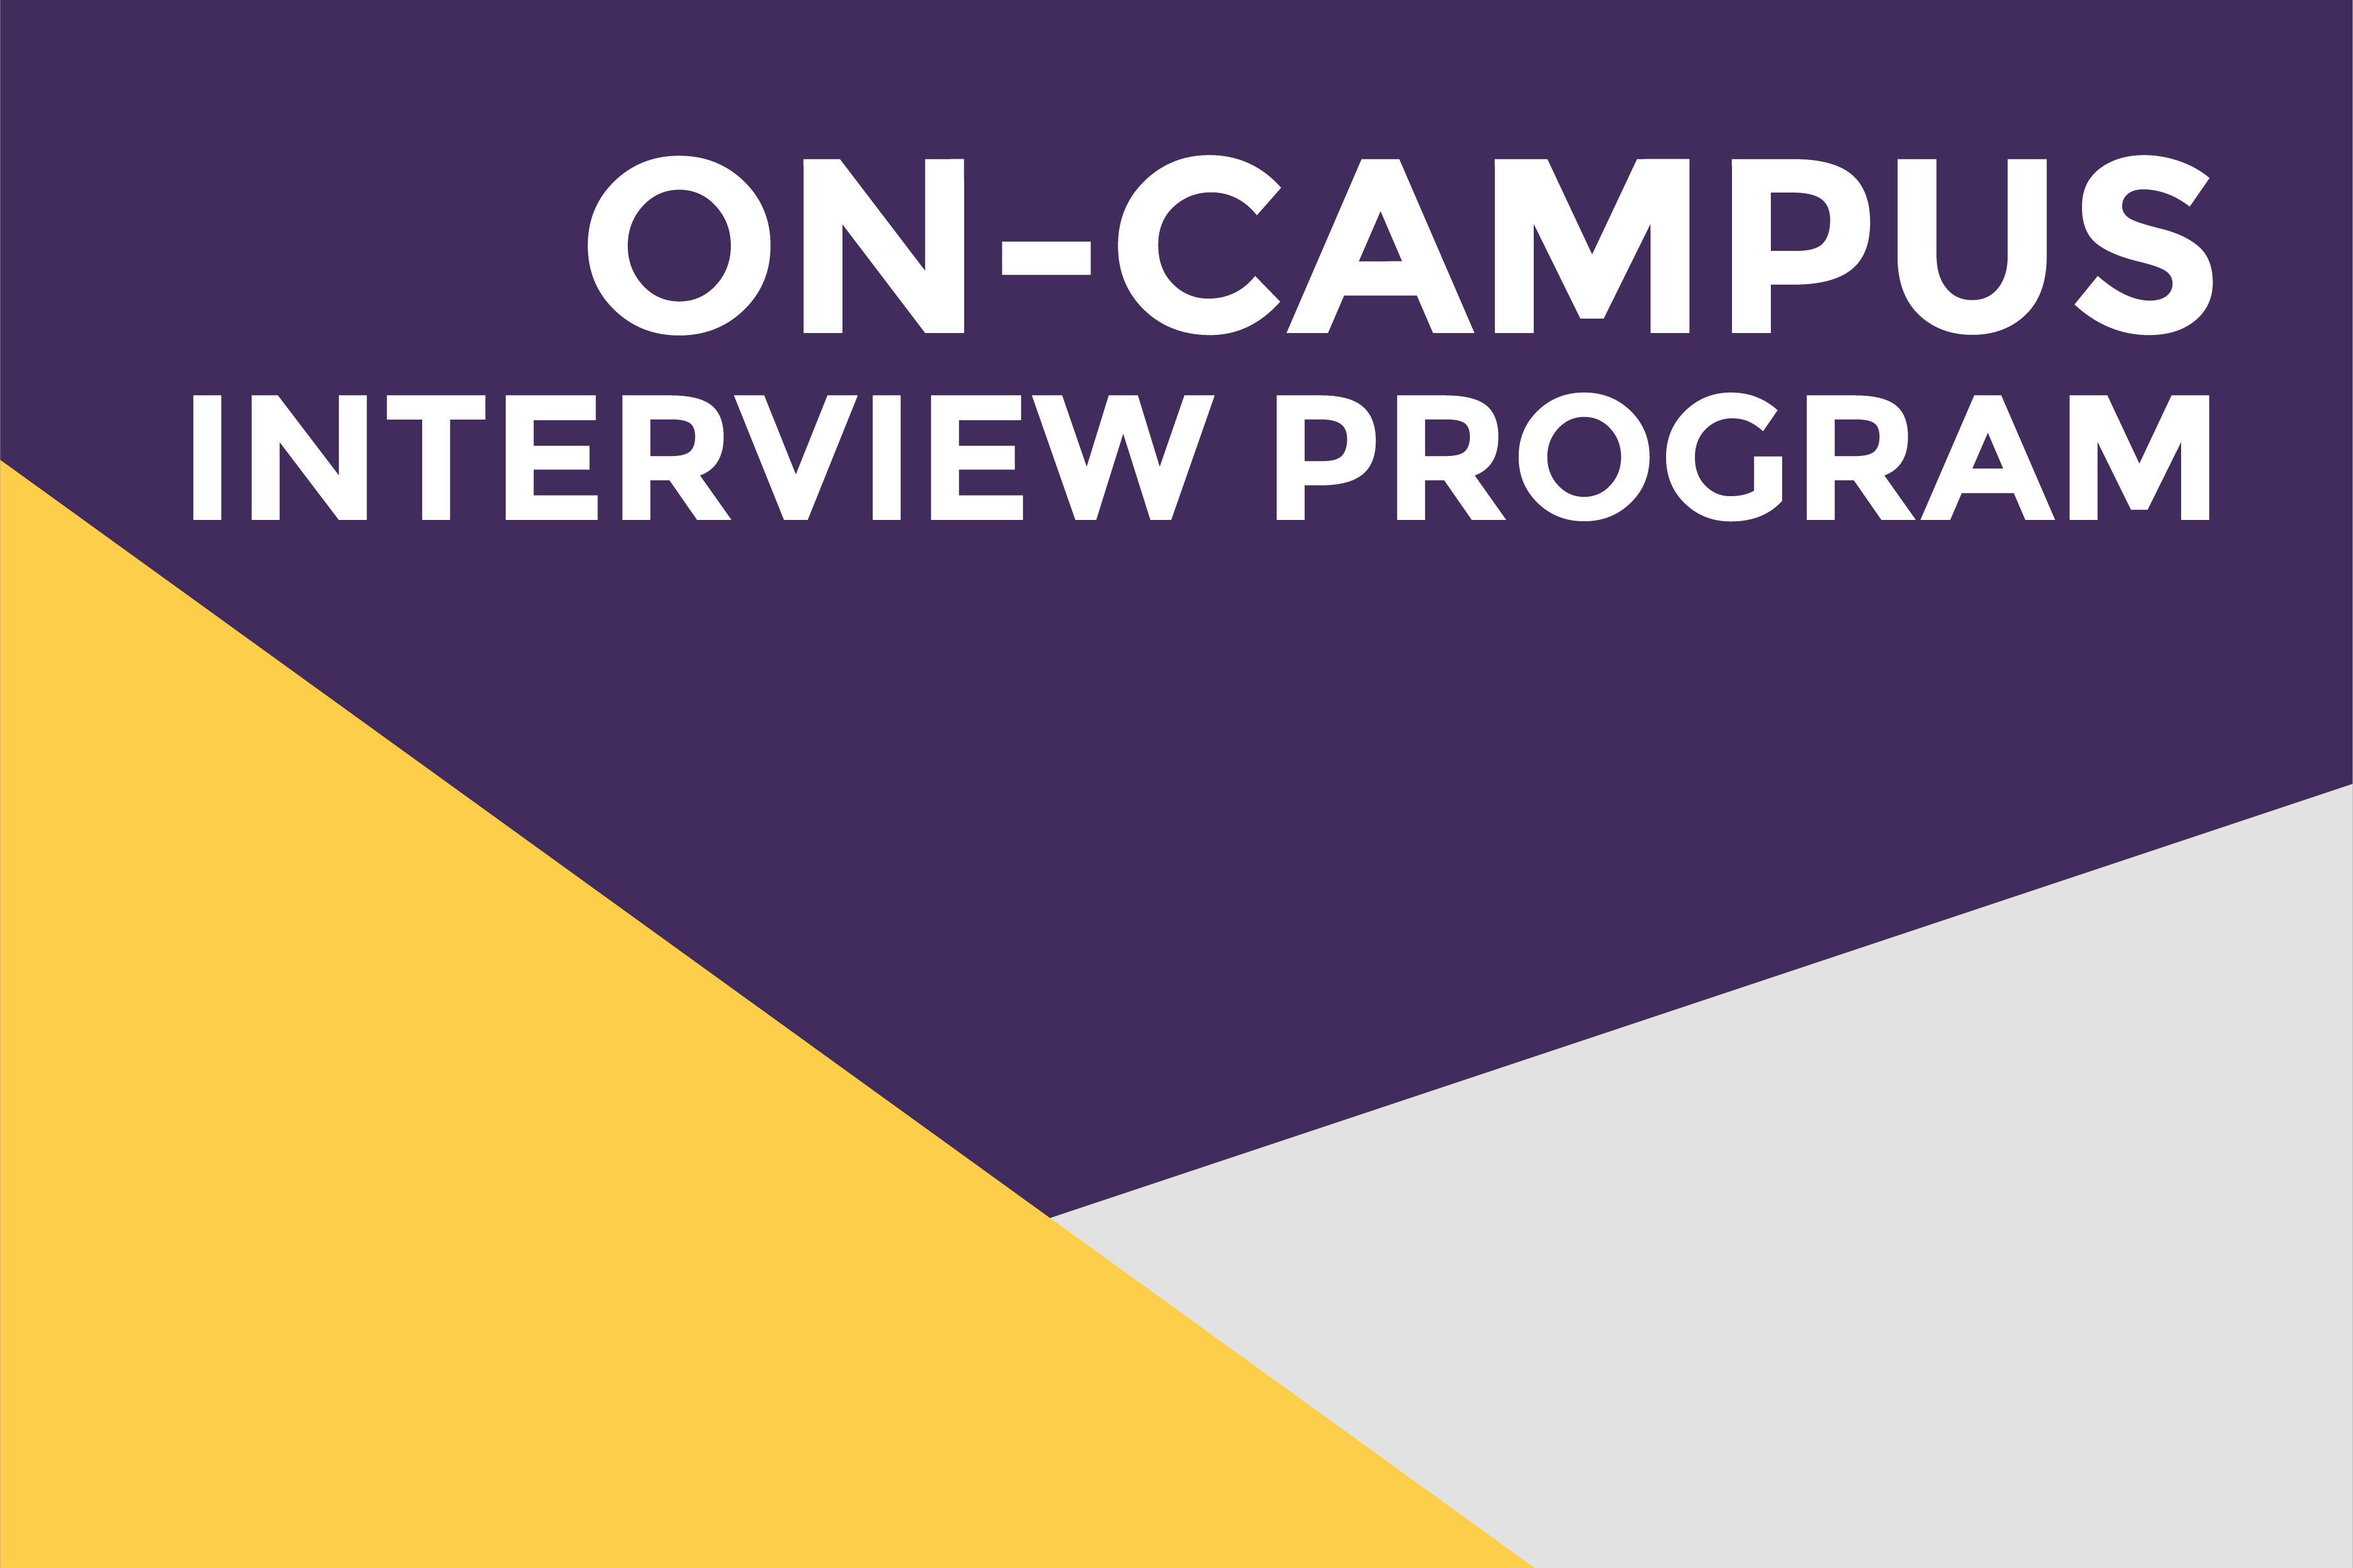 On campus interview program at UW-Whitewater